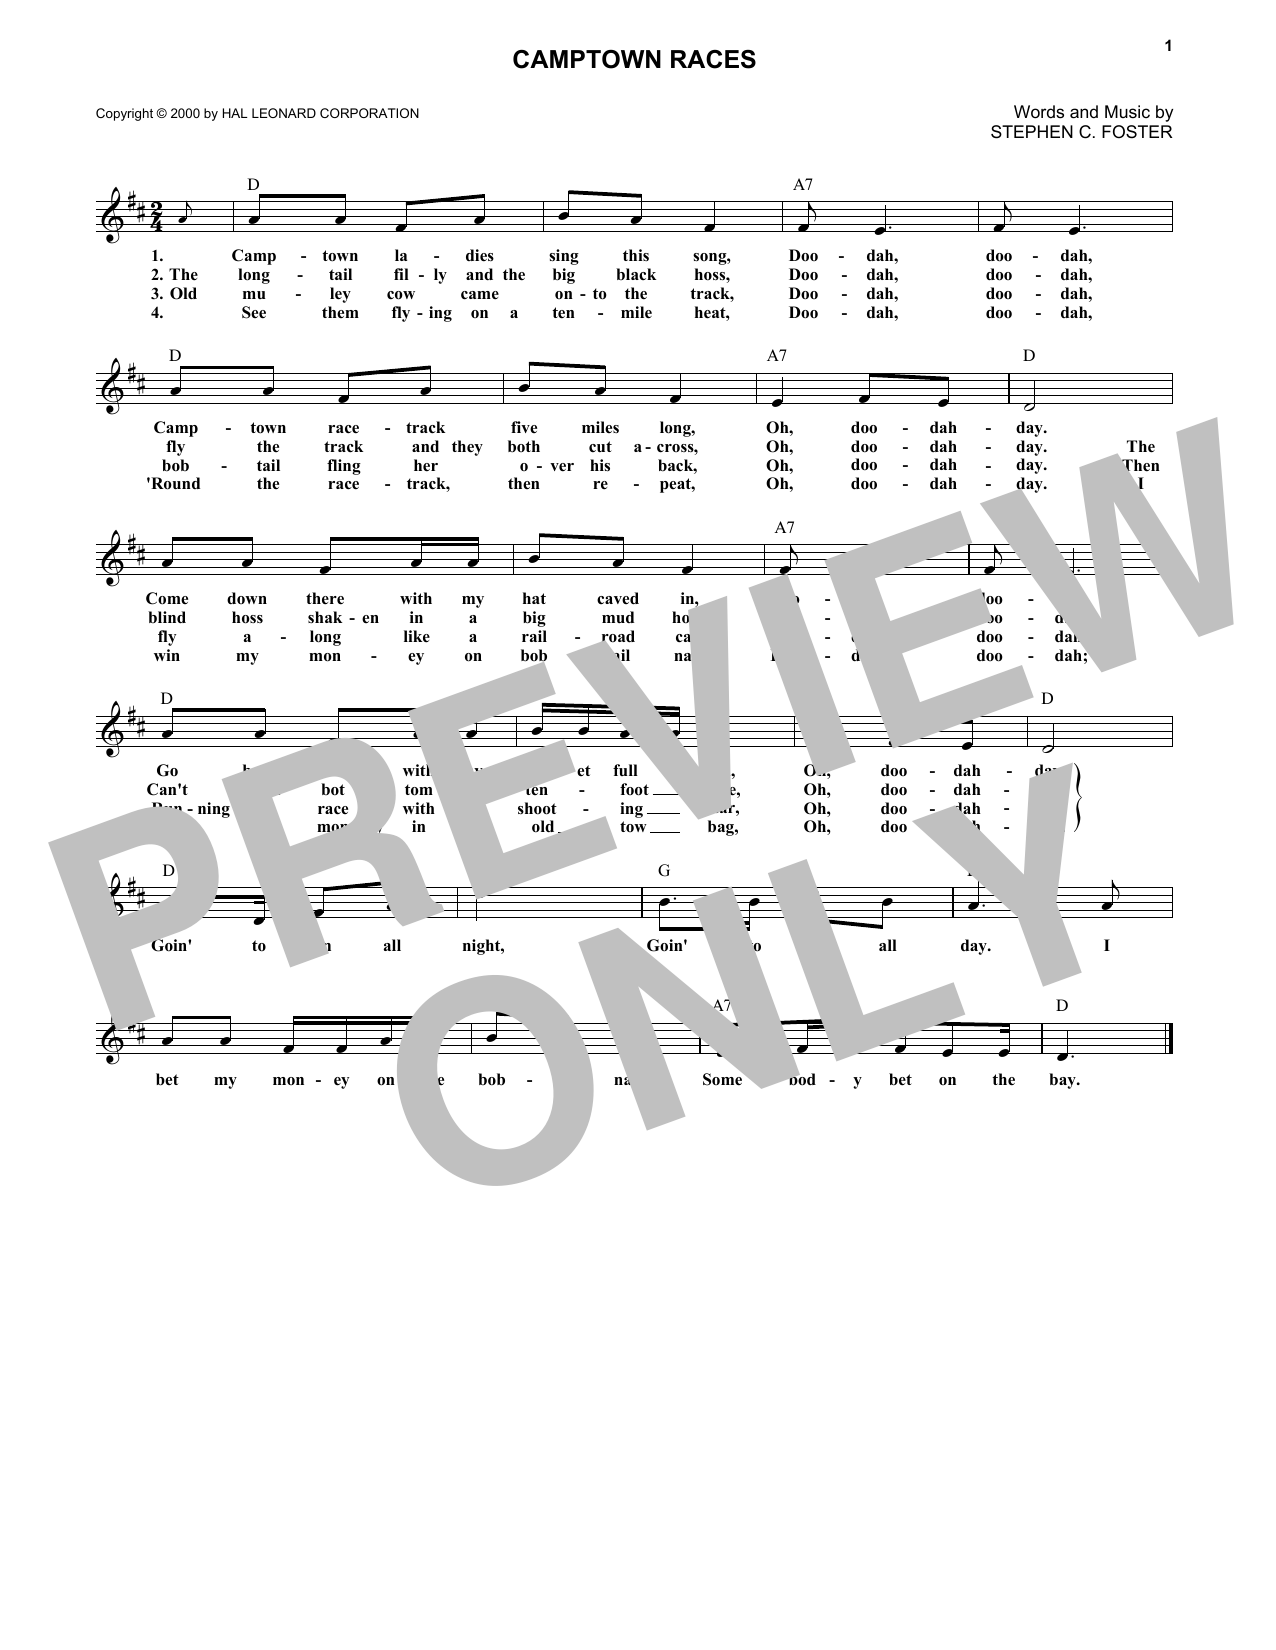 Stephen C. Foster Camptown Races sheet music notes printable PDF score